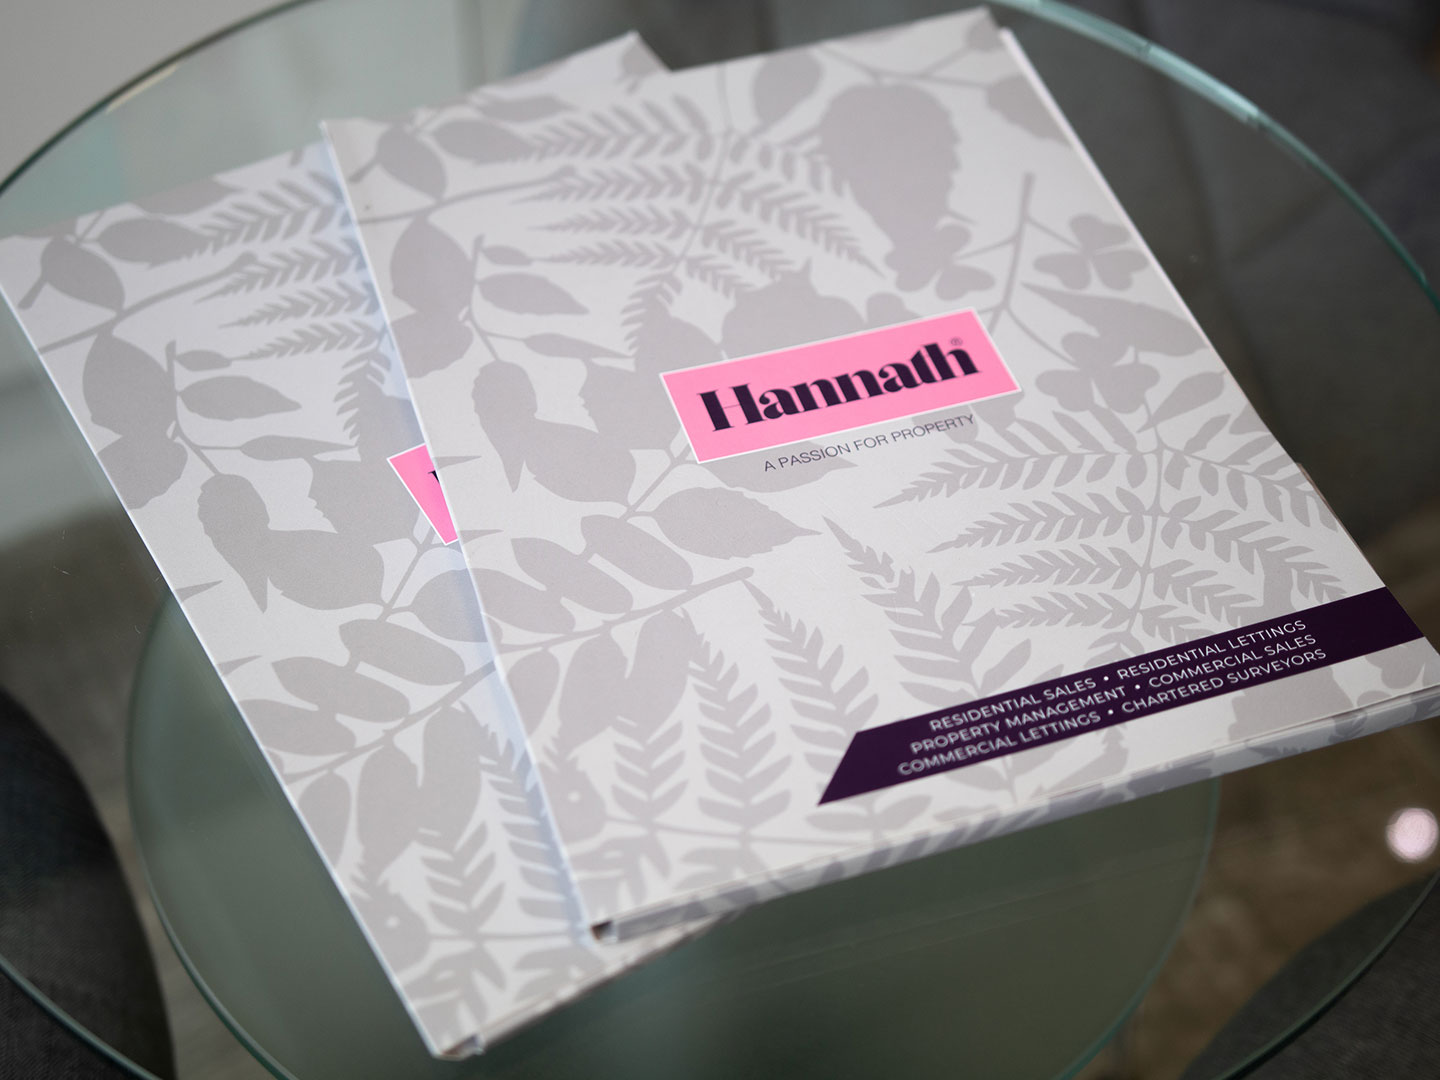 Hannath Brochures